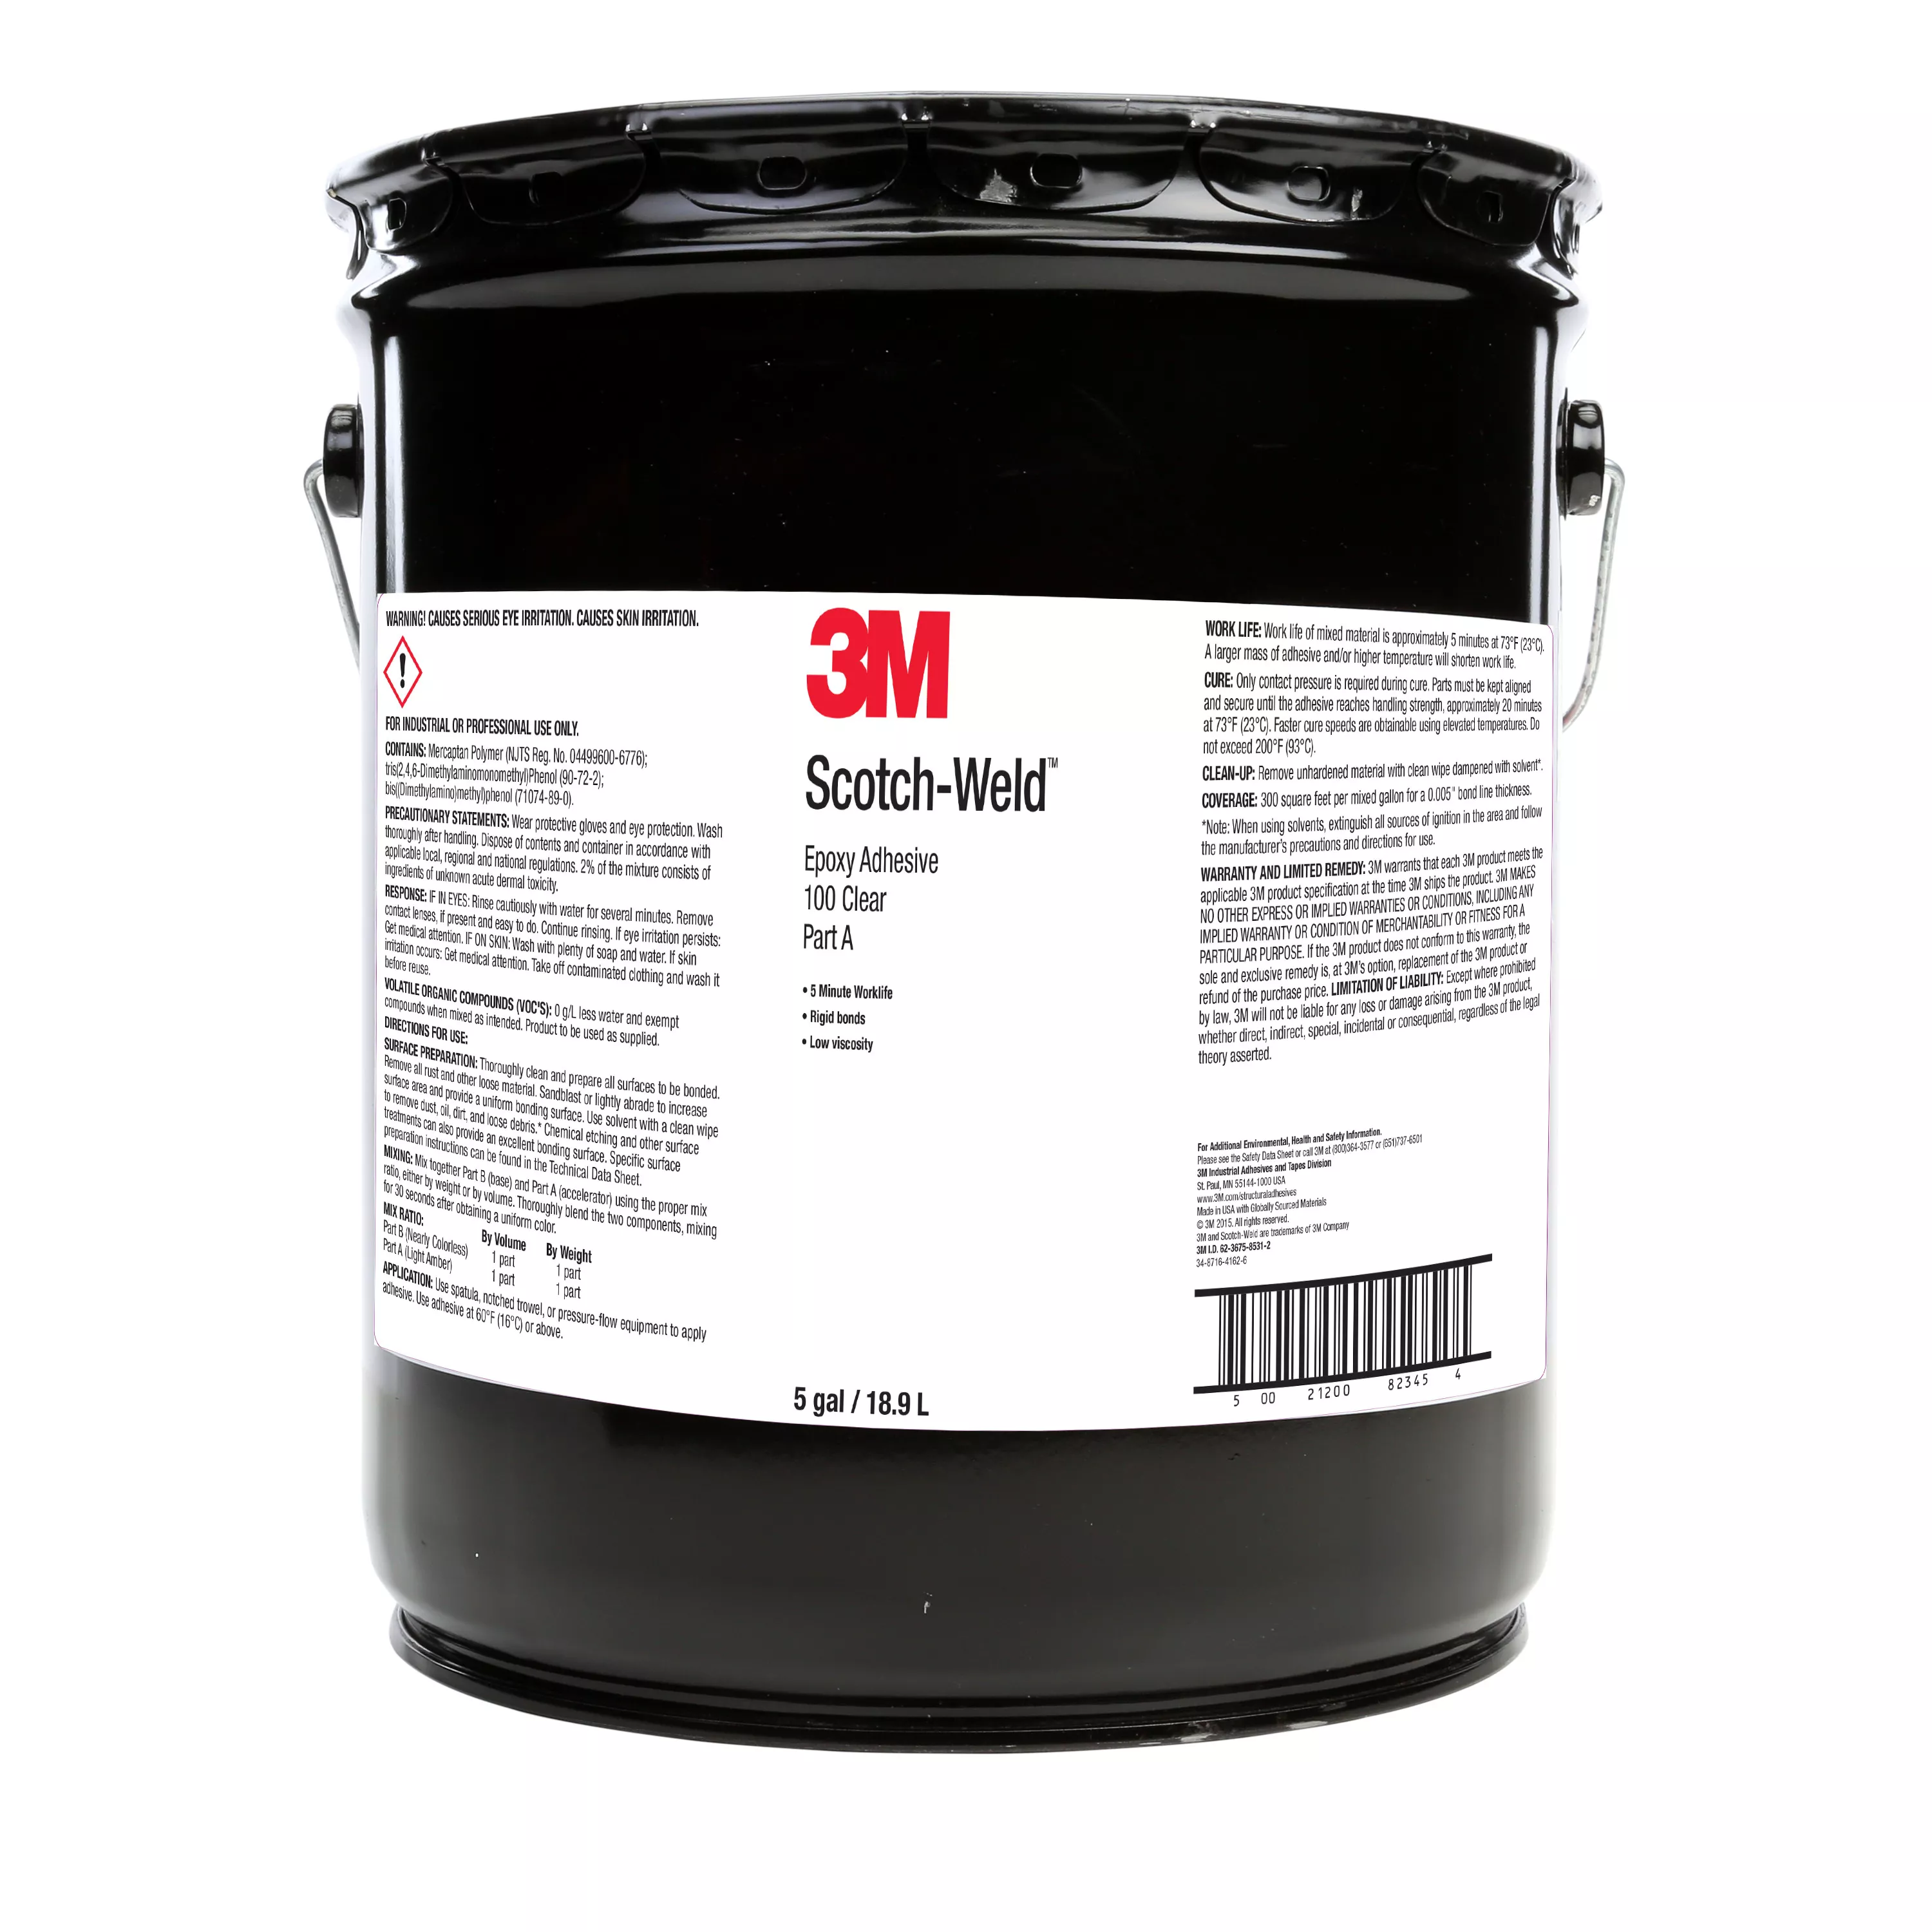 3M™ Scotch-Weld™ Epoxy Adhesive 100, Clear, Part A, 5 Gallon (Pail),
Drum